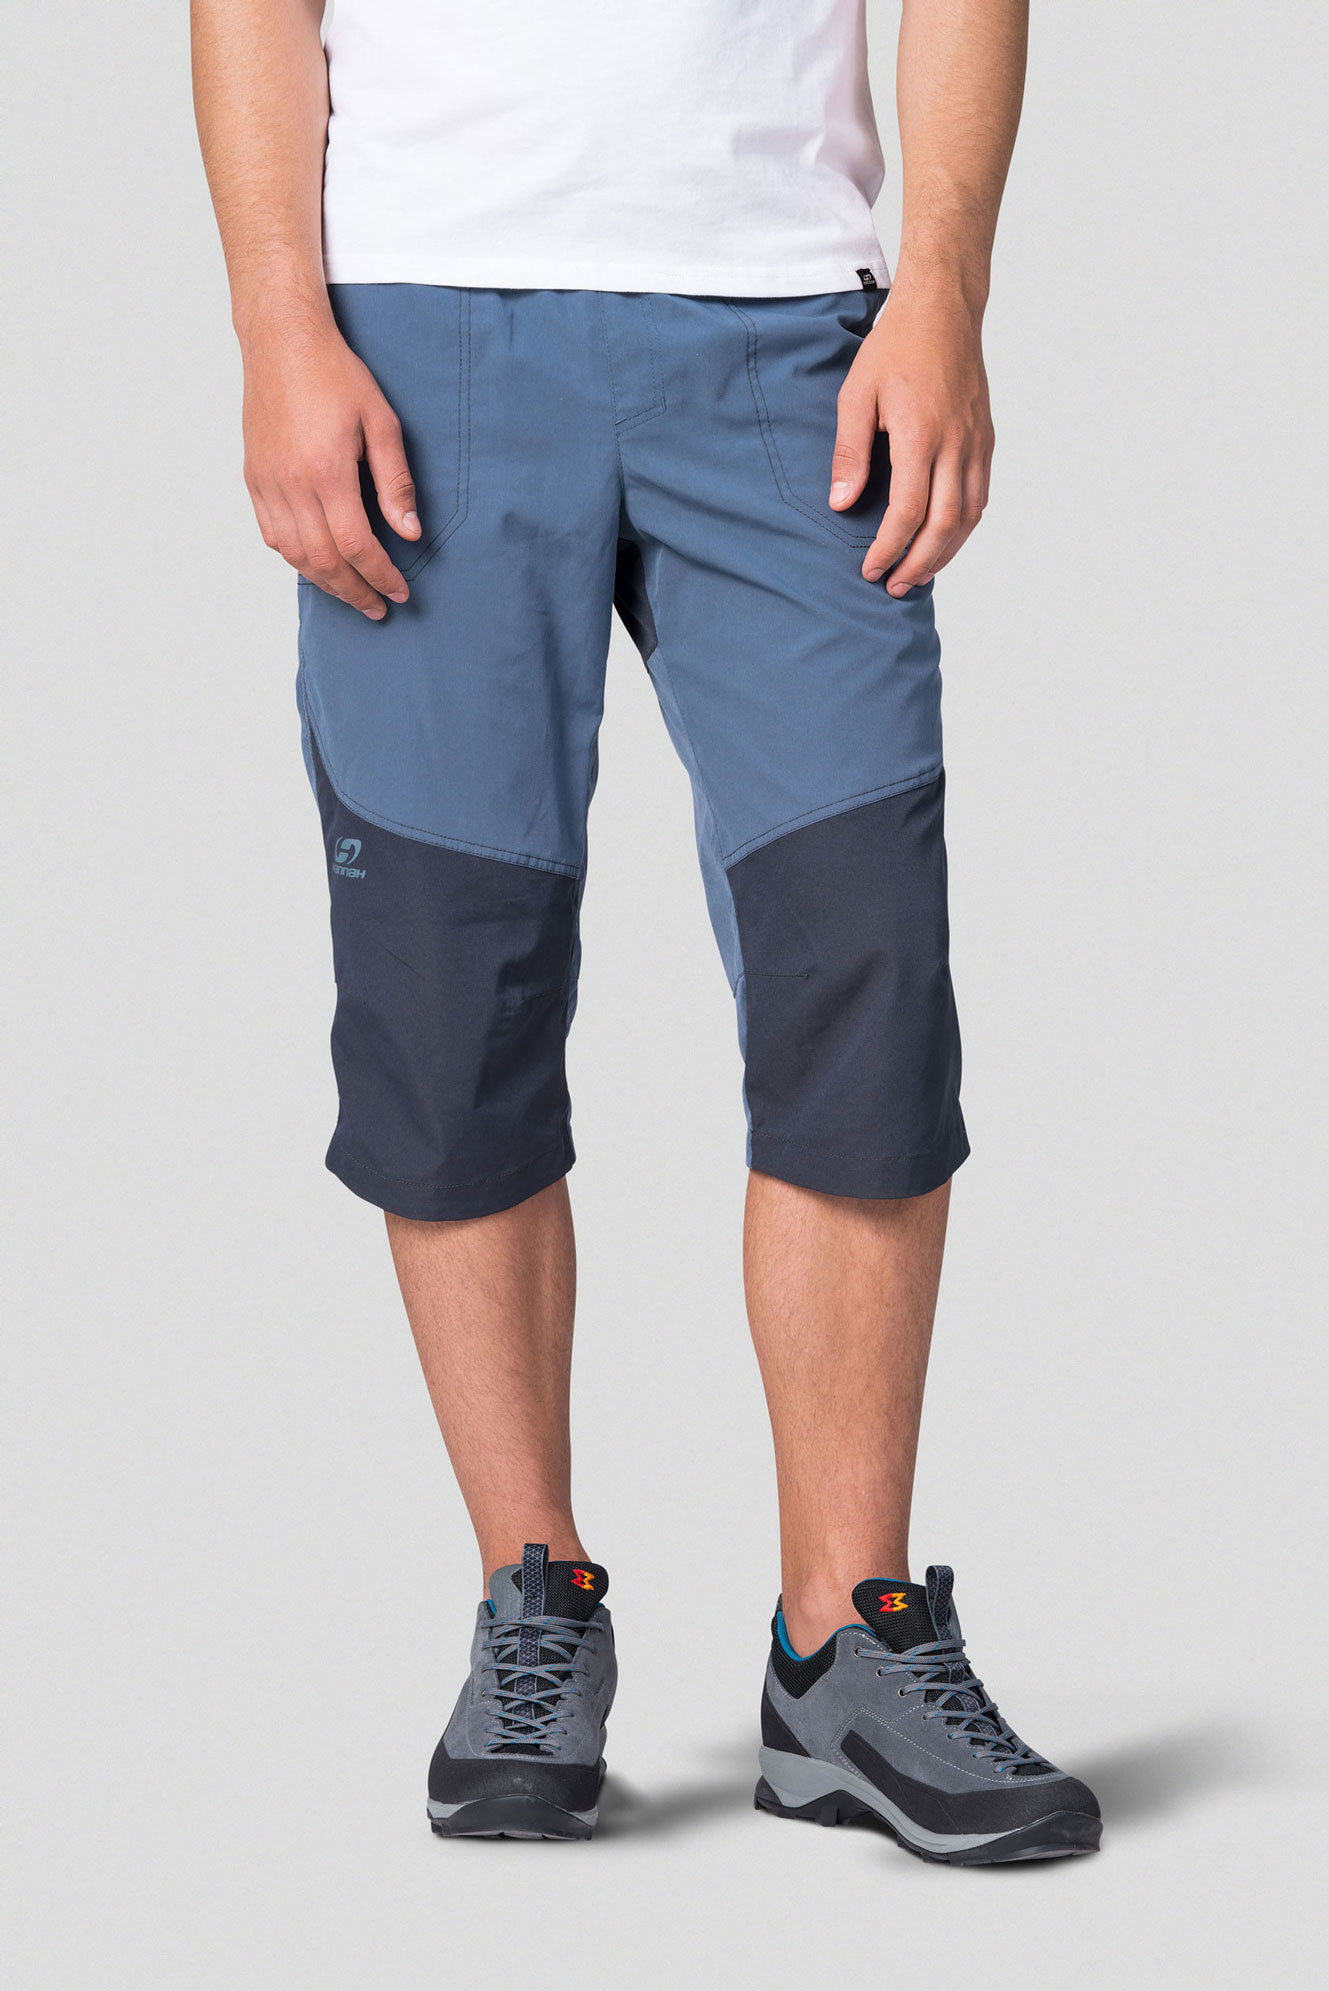 Men's Capri pants